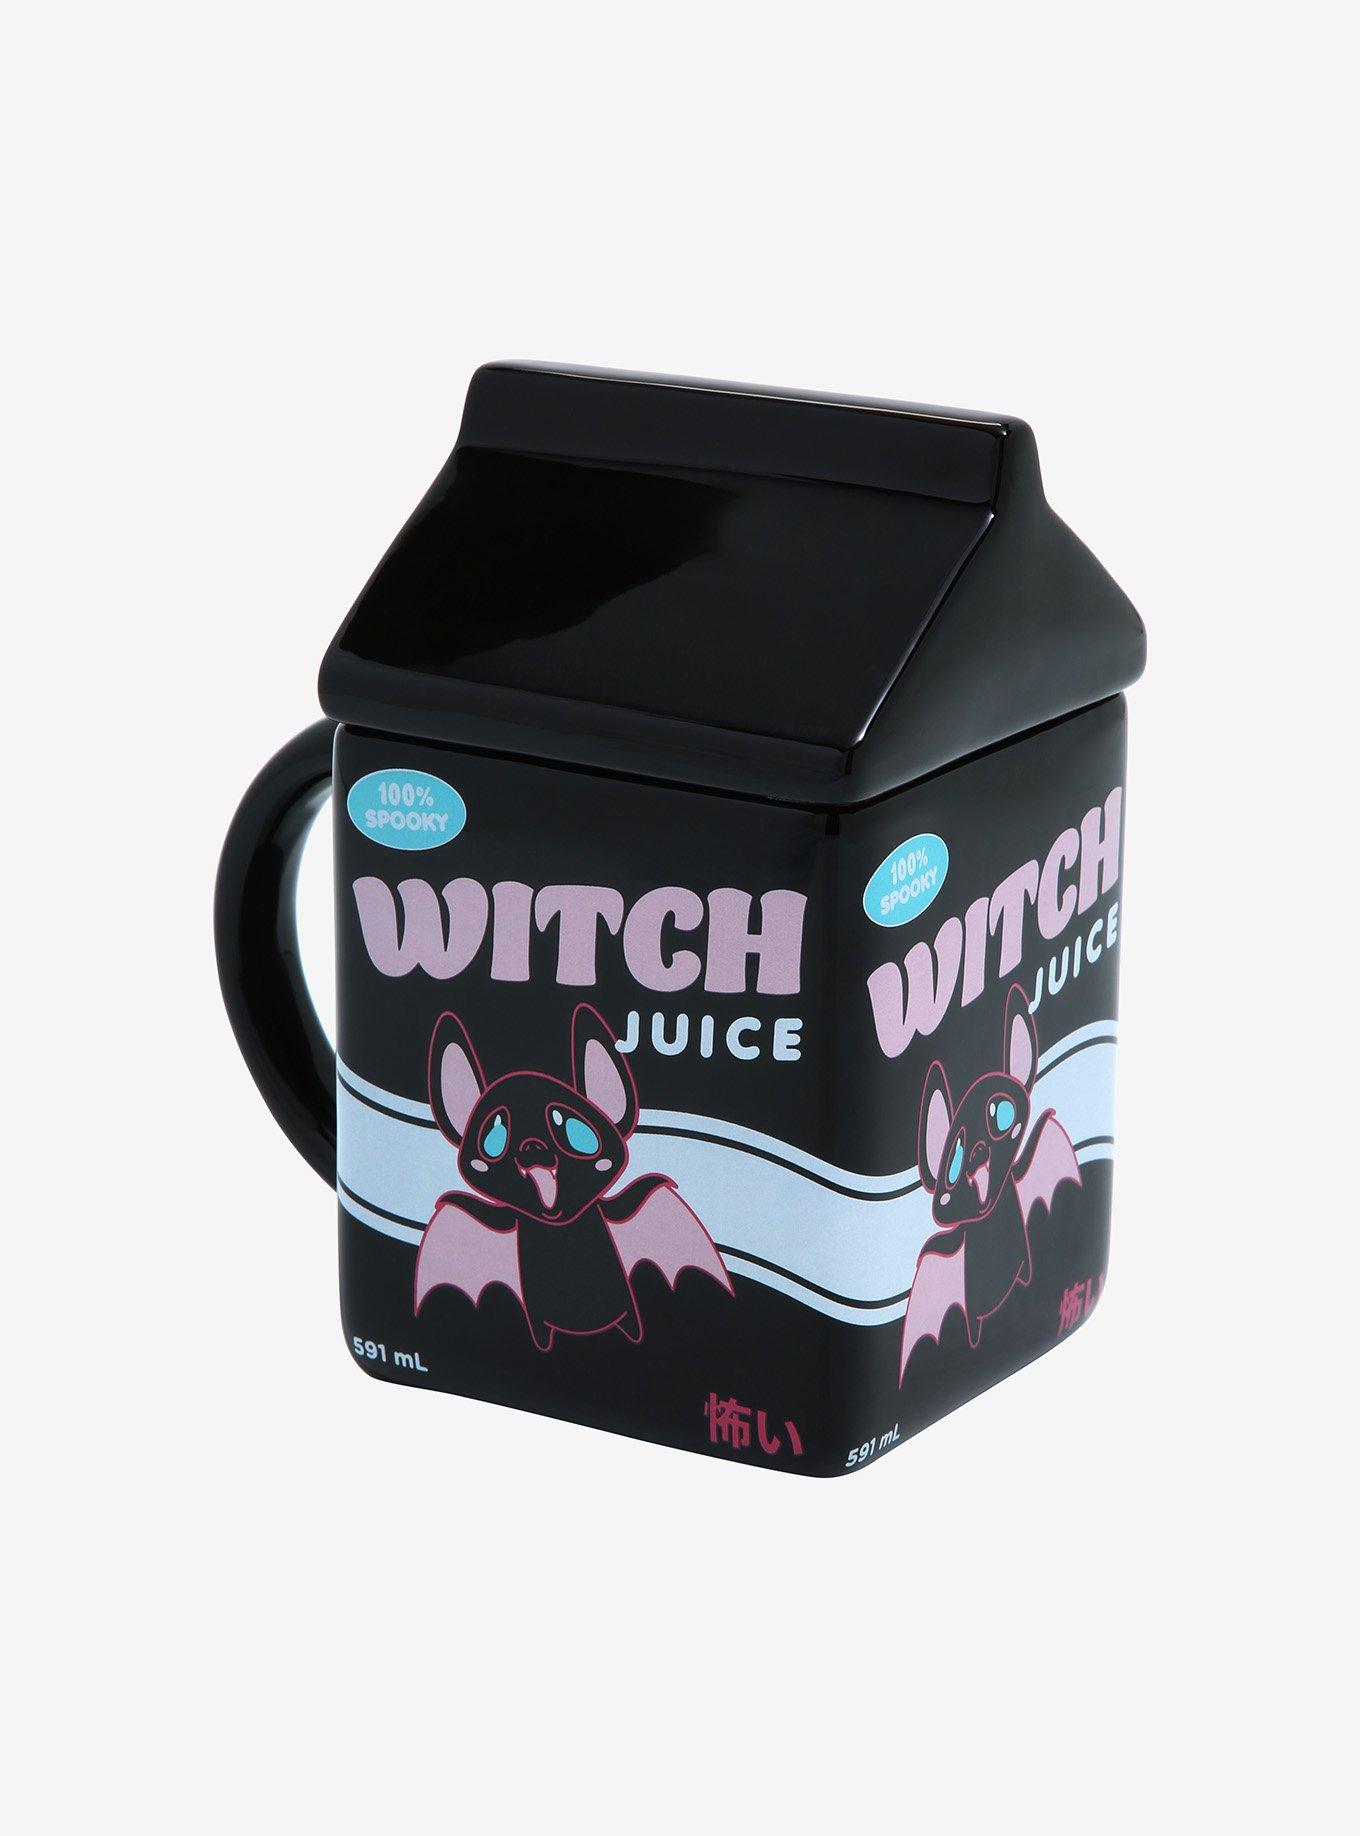 Witch Juice Milk Carton Ceramic Mug